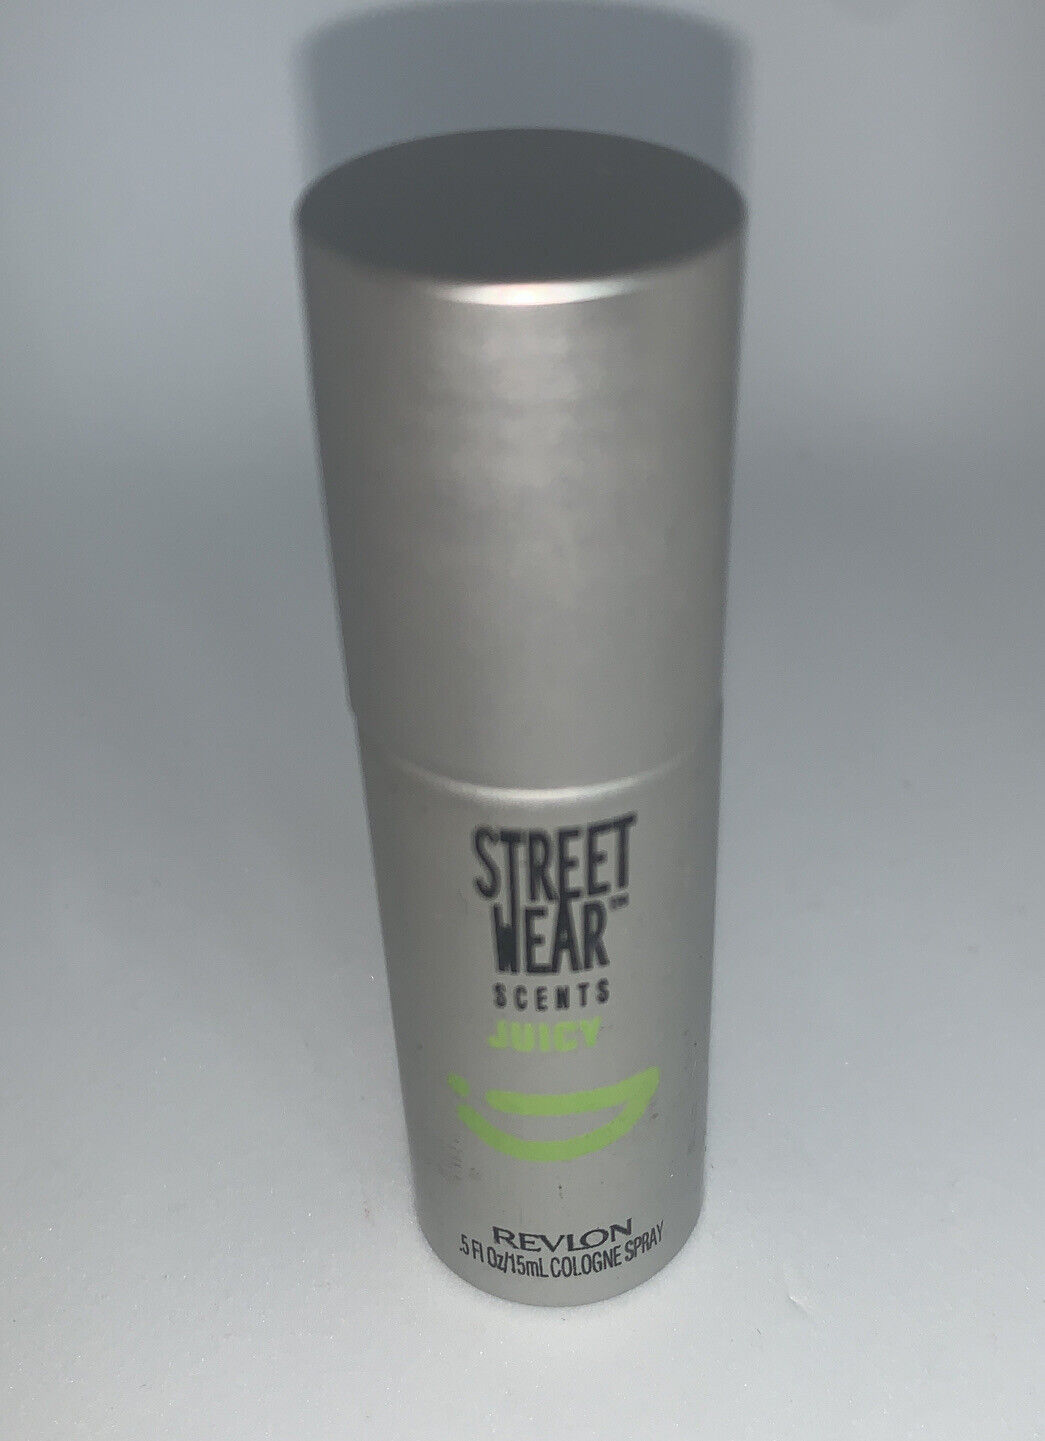 Revlon Street Wear Scents jUICY  .5 oz Cologne Spray Perfume For Women